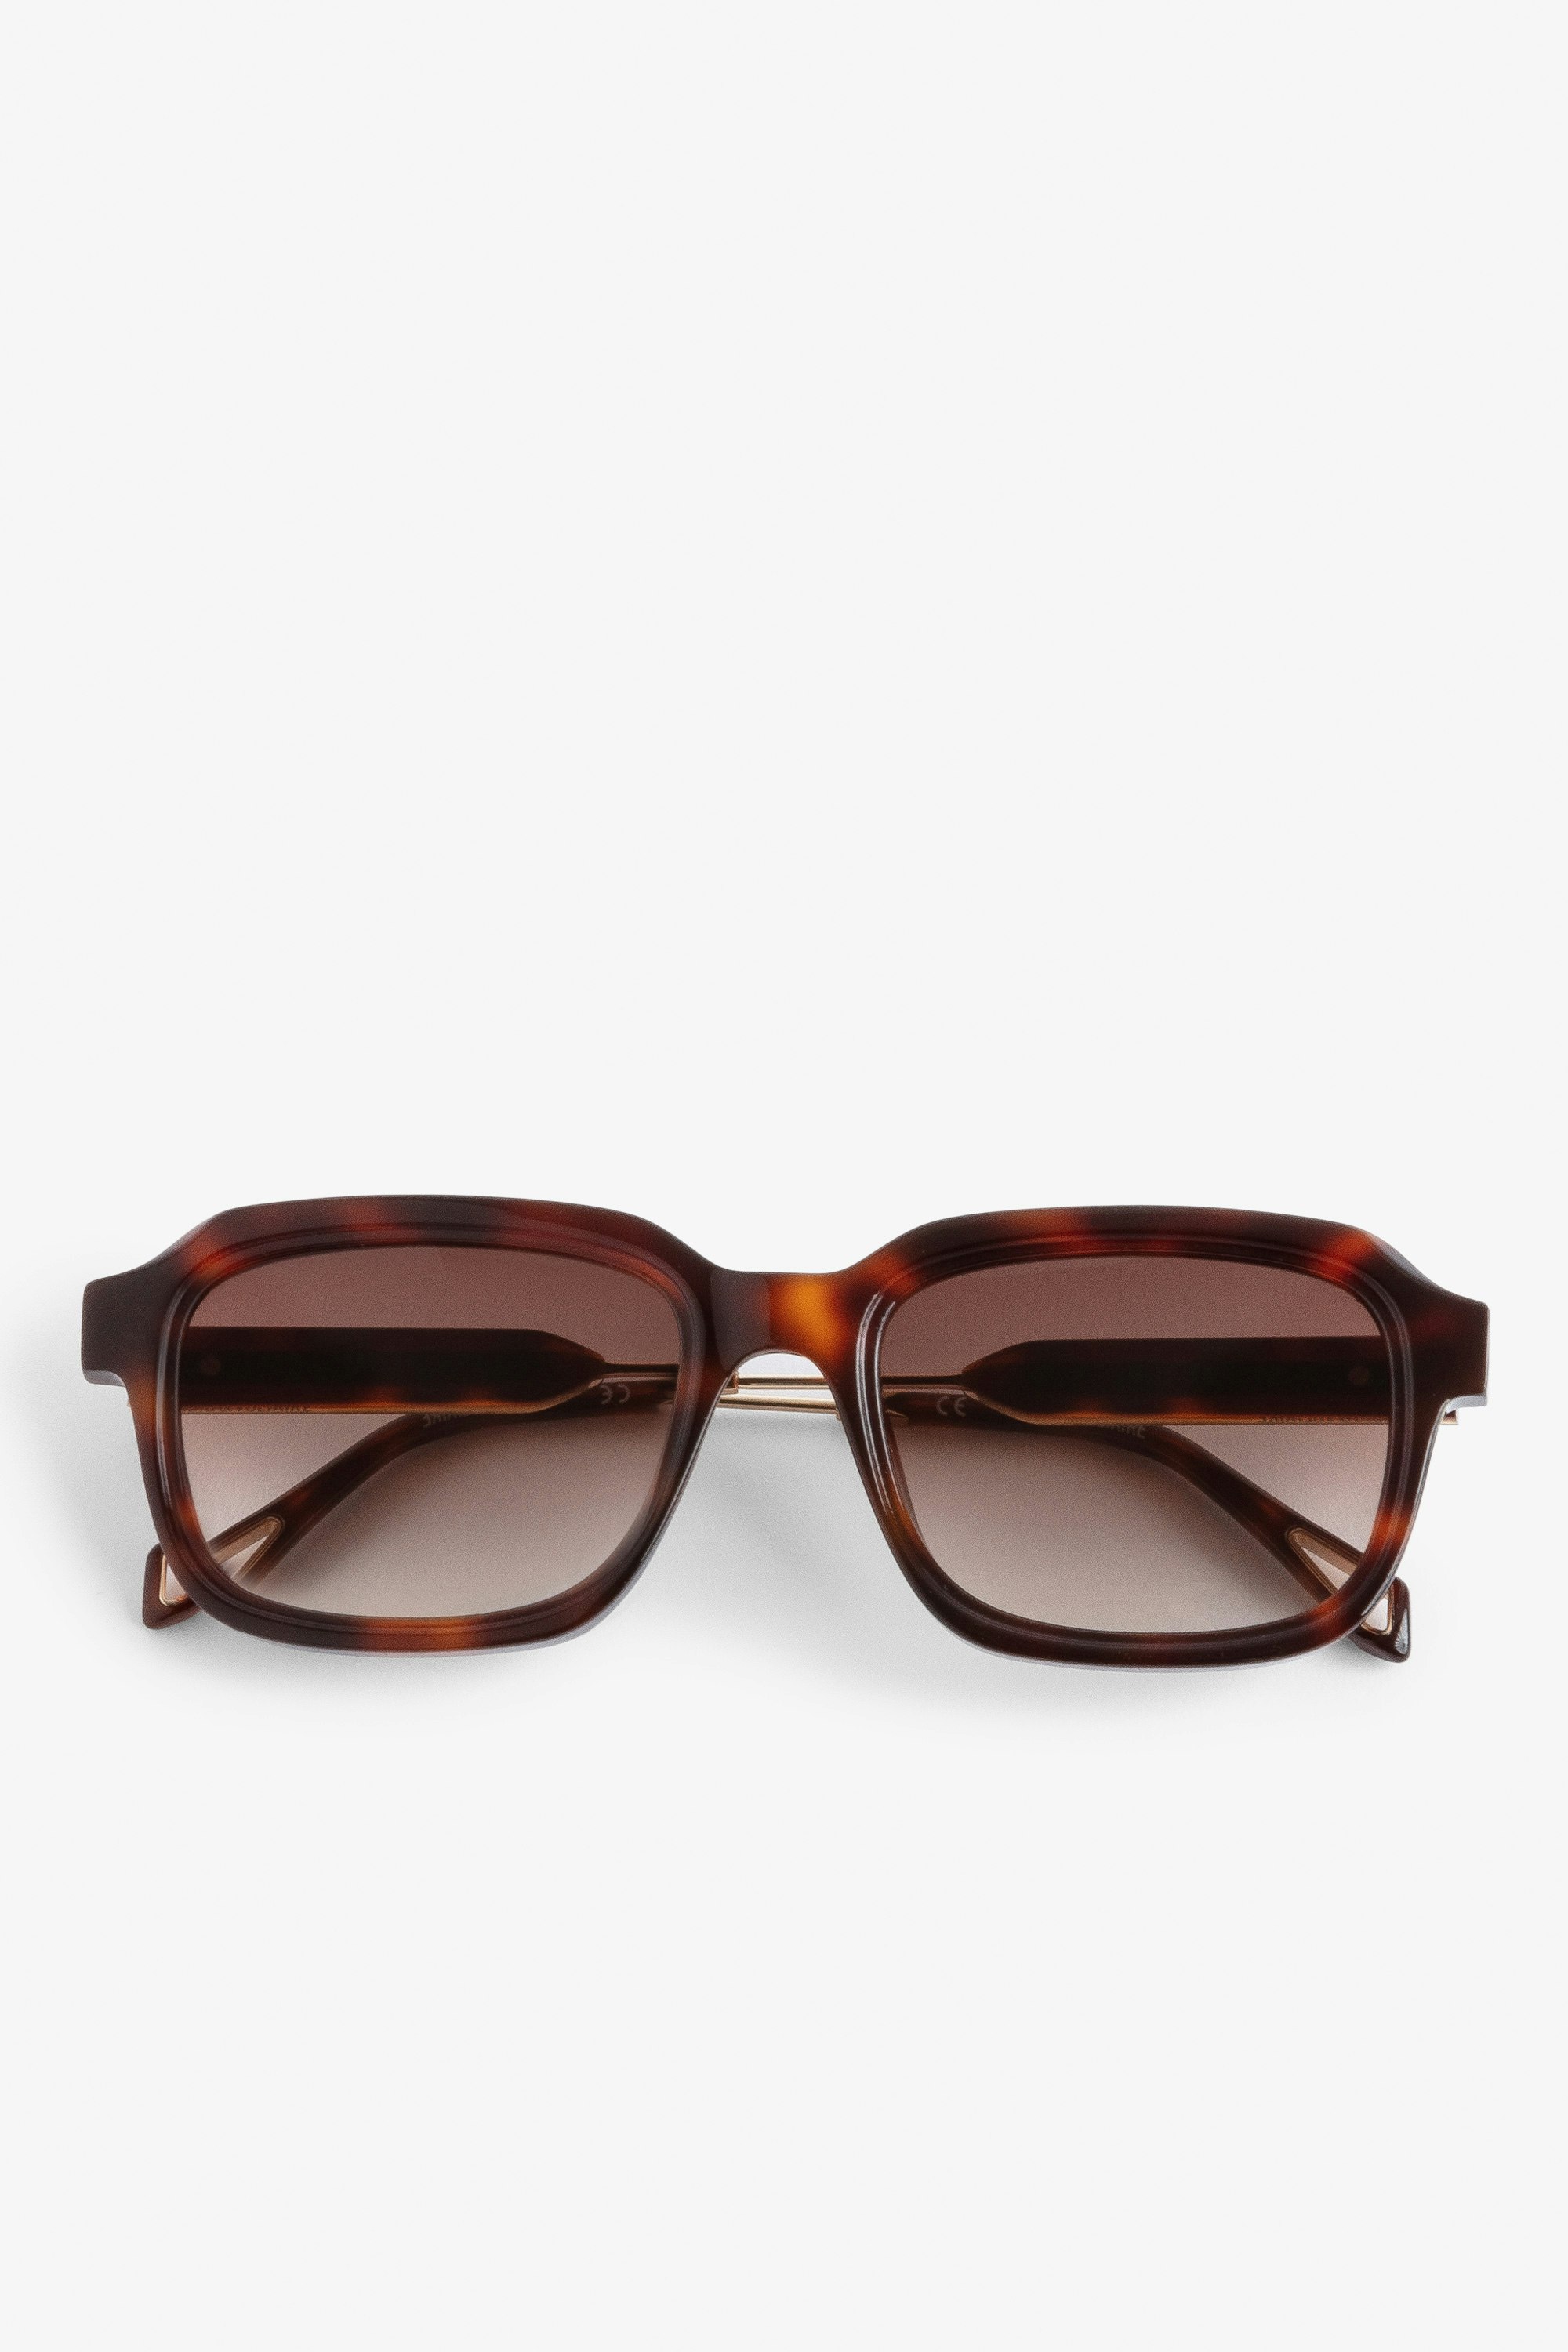 Squared ZV Sunglasses Square-shaped unisex sunglasses in brown acetate.